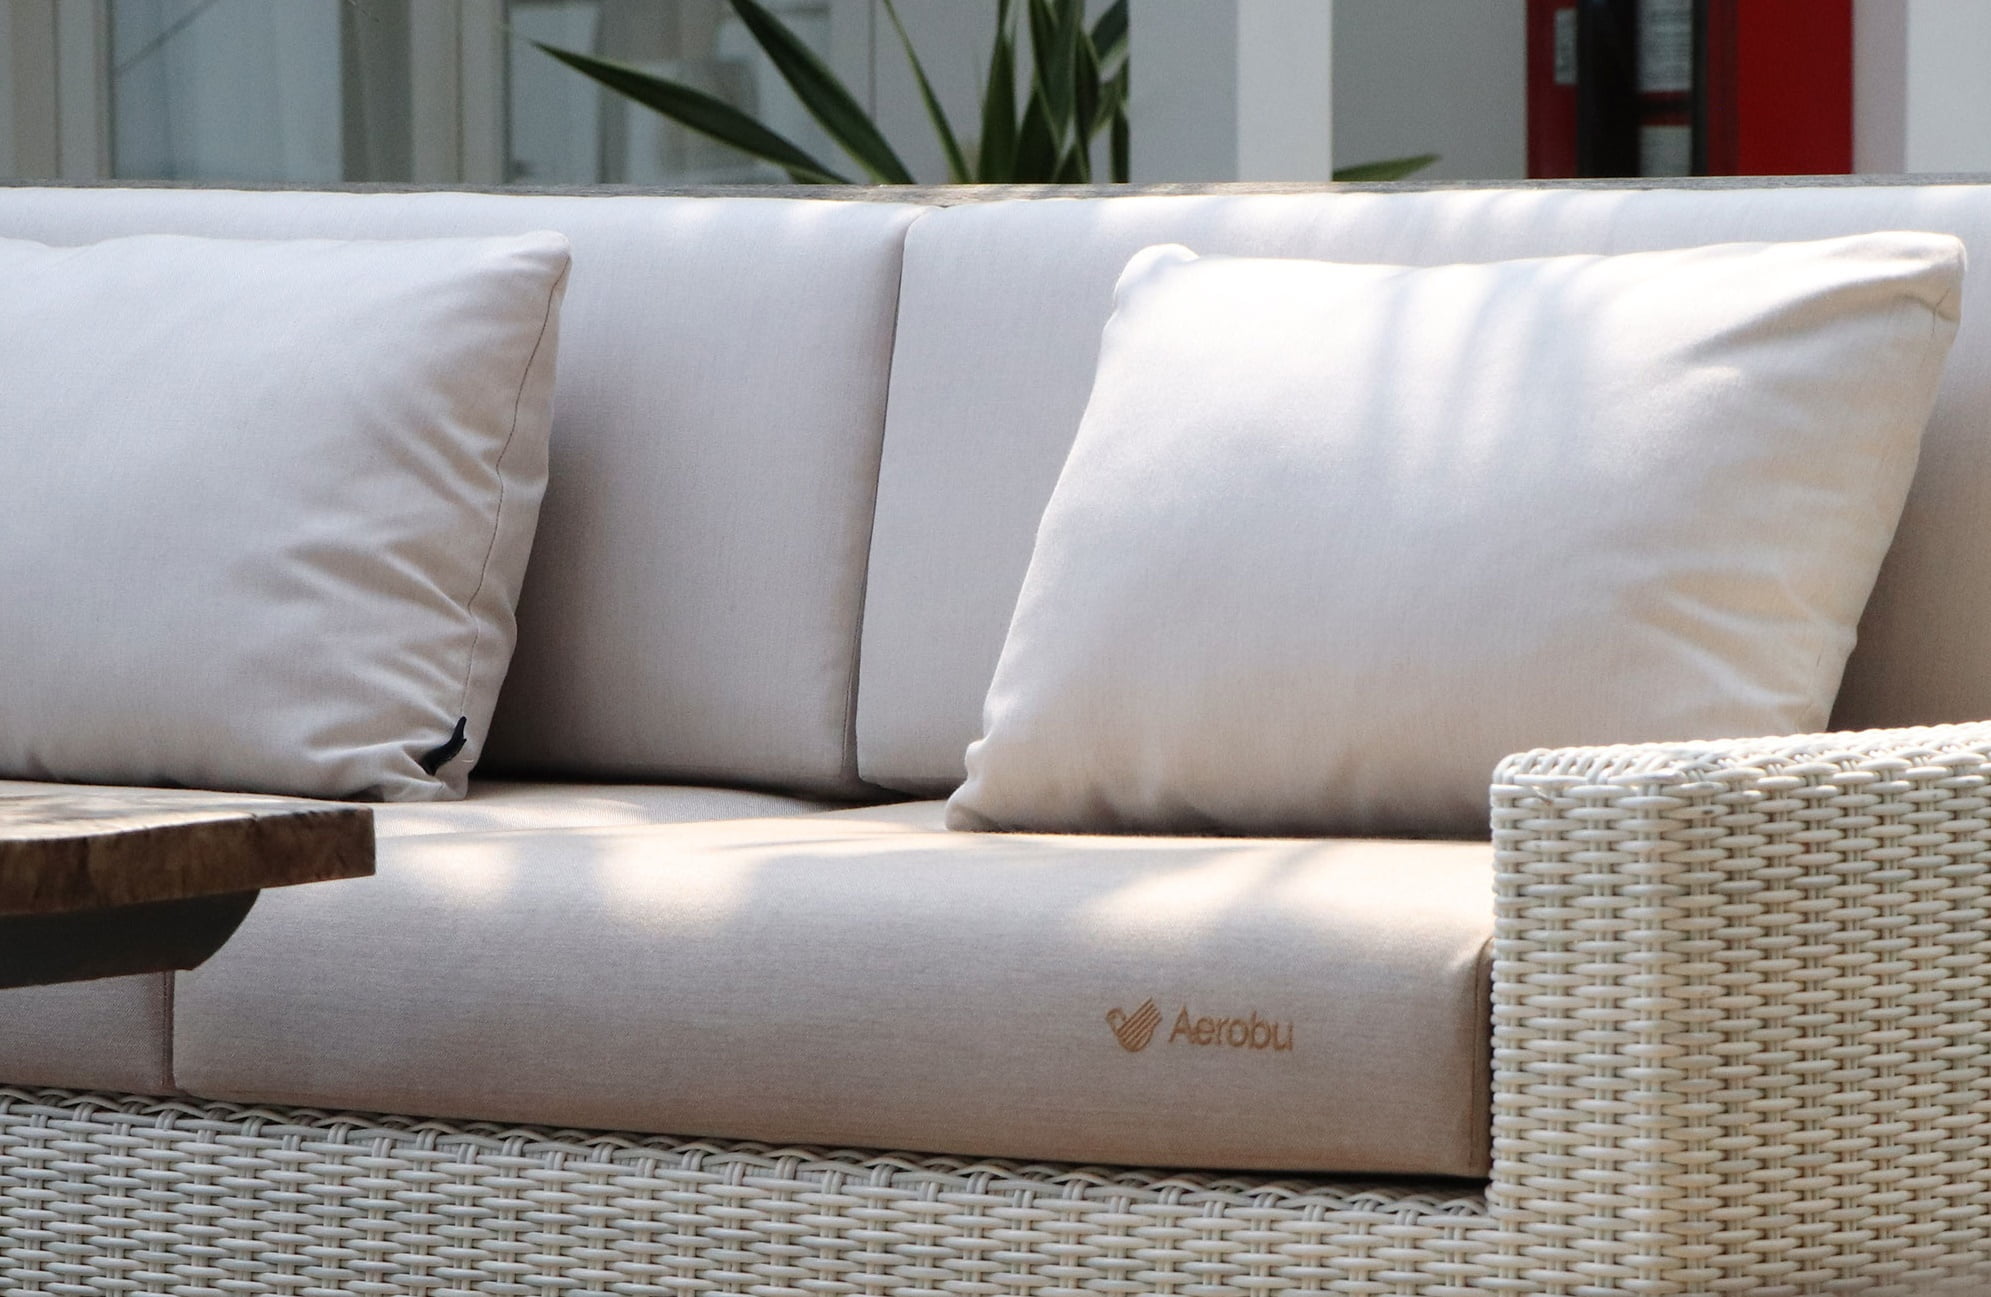 Custom Sofa Cushions: The Best Your Sofa Experience